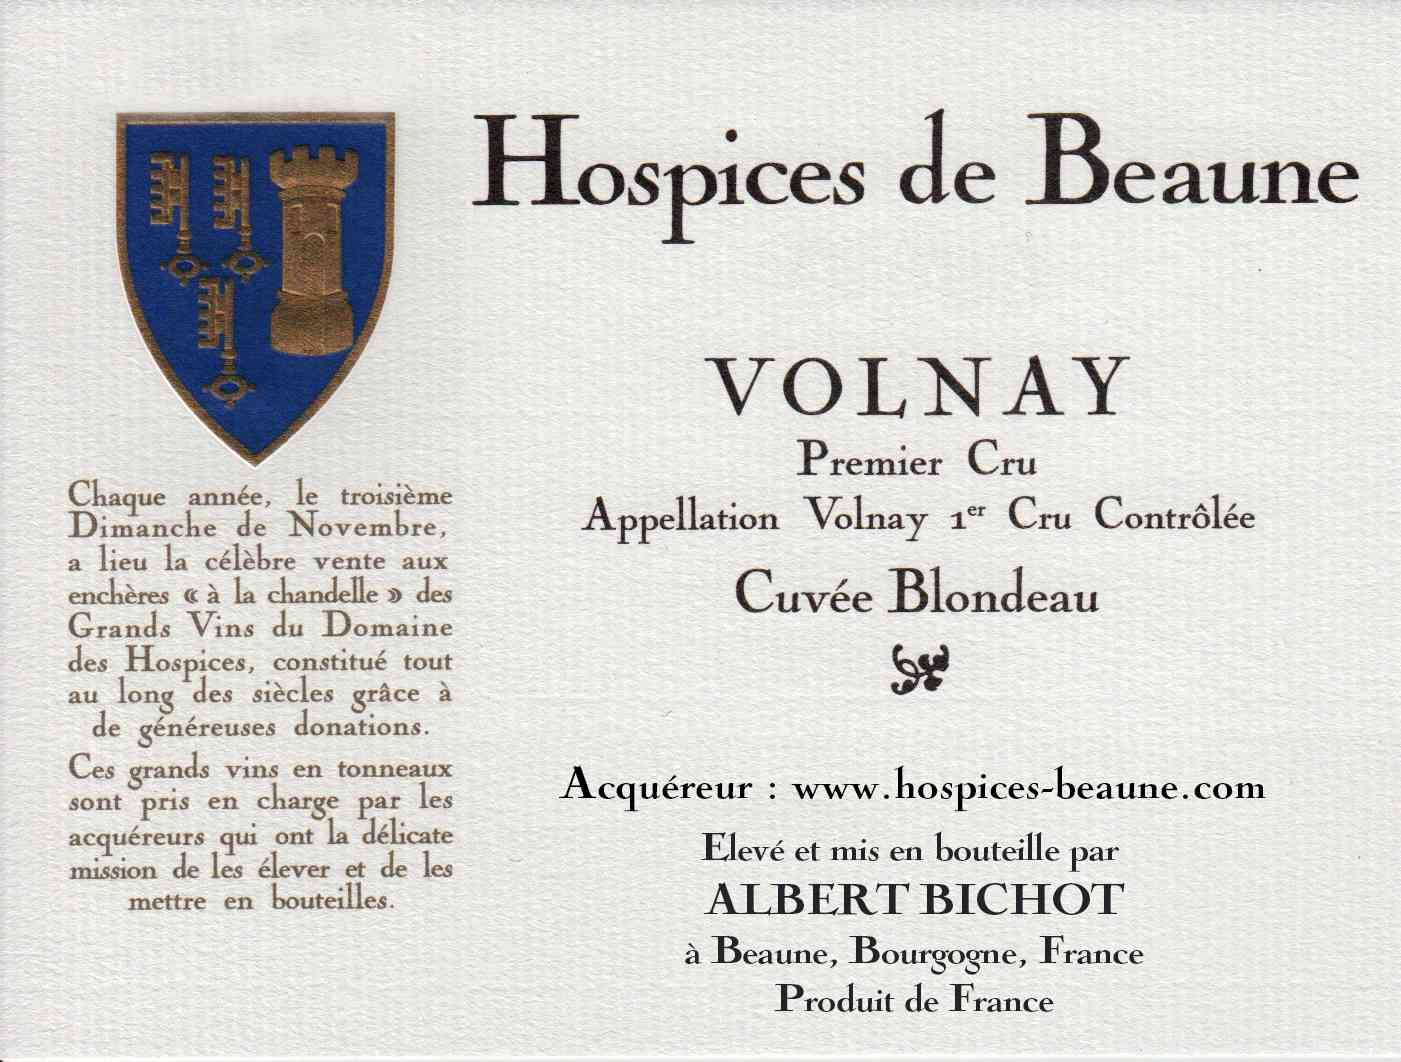 Encheres-auction-HospicesdeBeaune-AlbertBichot-Volnay-PremierCru-Cuvee-Blondeau